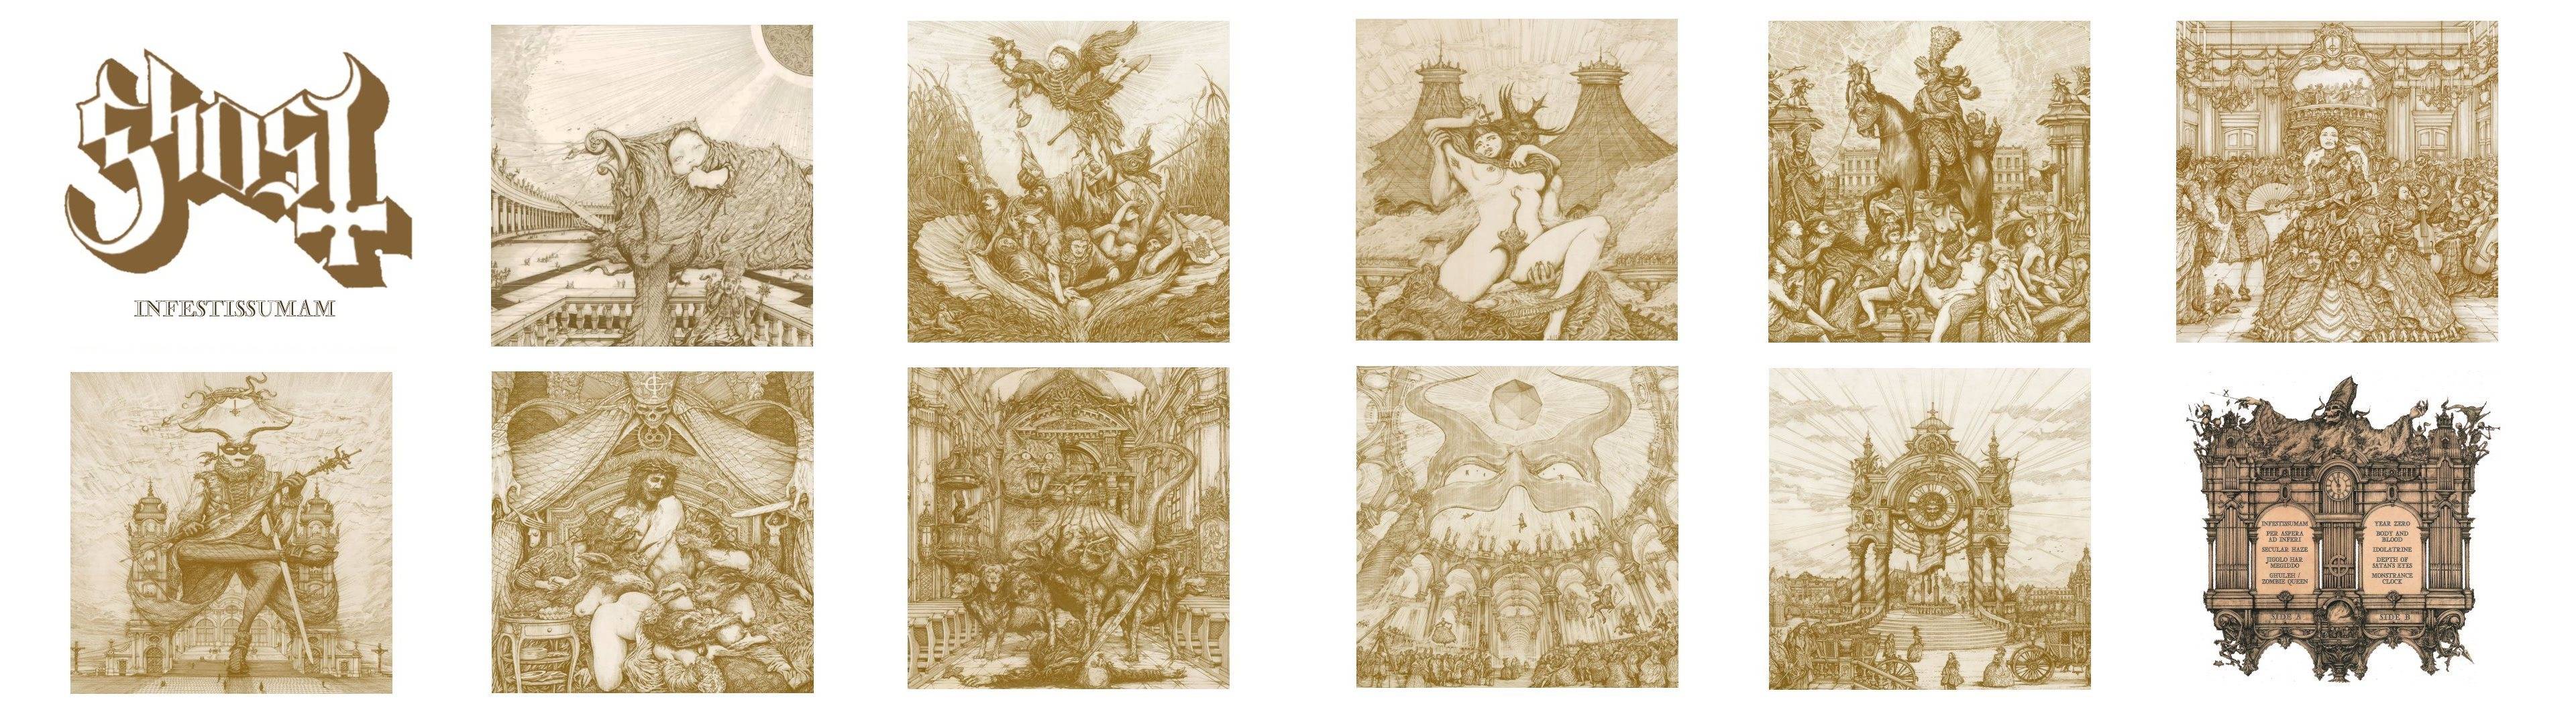 Ghost Bc Infestissumam Booklet Artwork [ X 1080] Imgur - Ghost Infestissumam Booklet , HD Wallpaper & Backgrounds